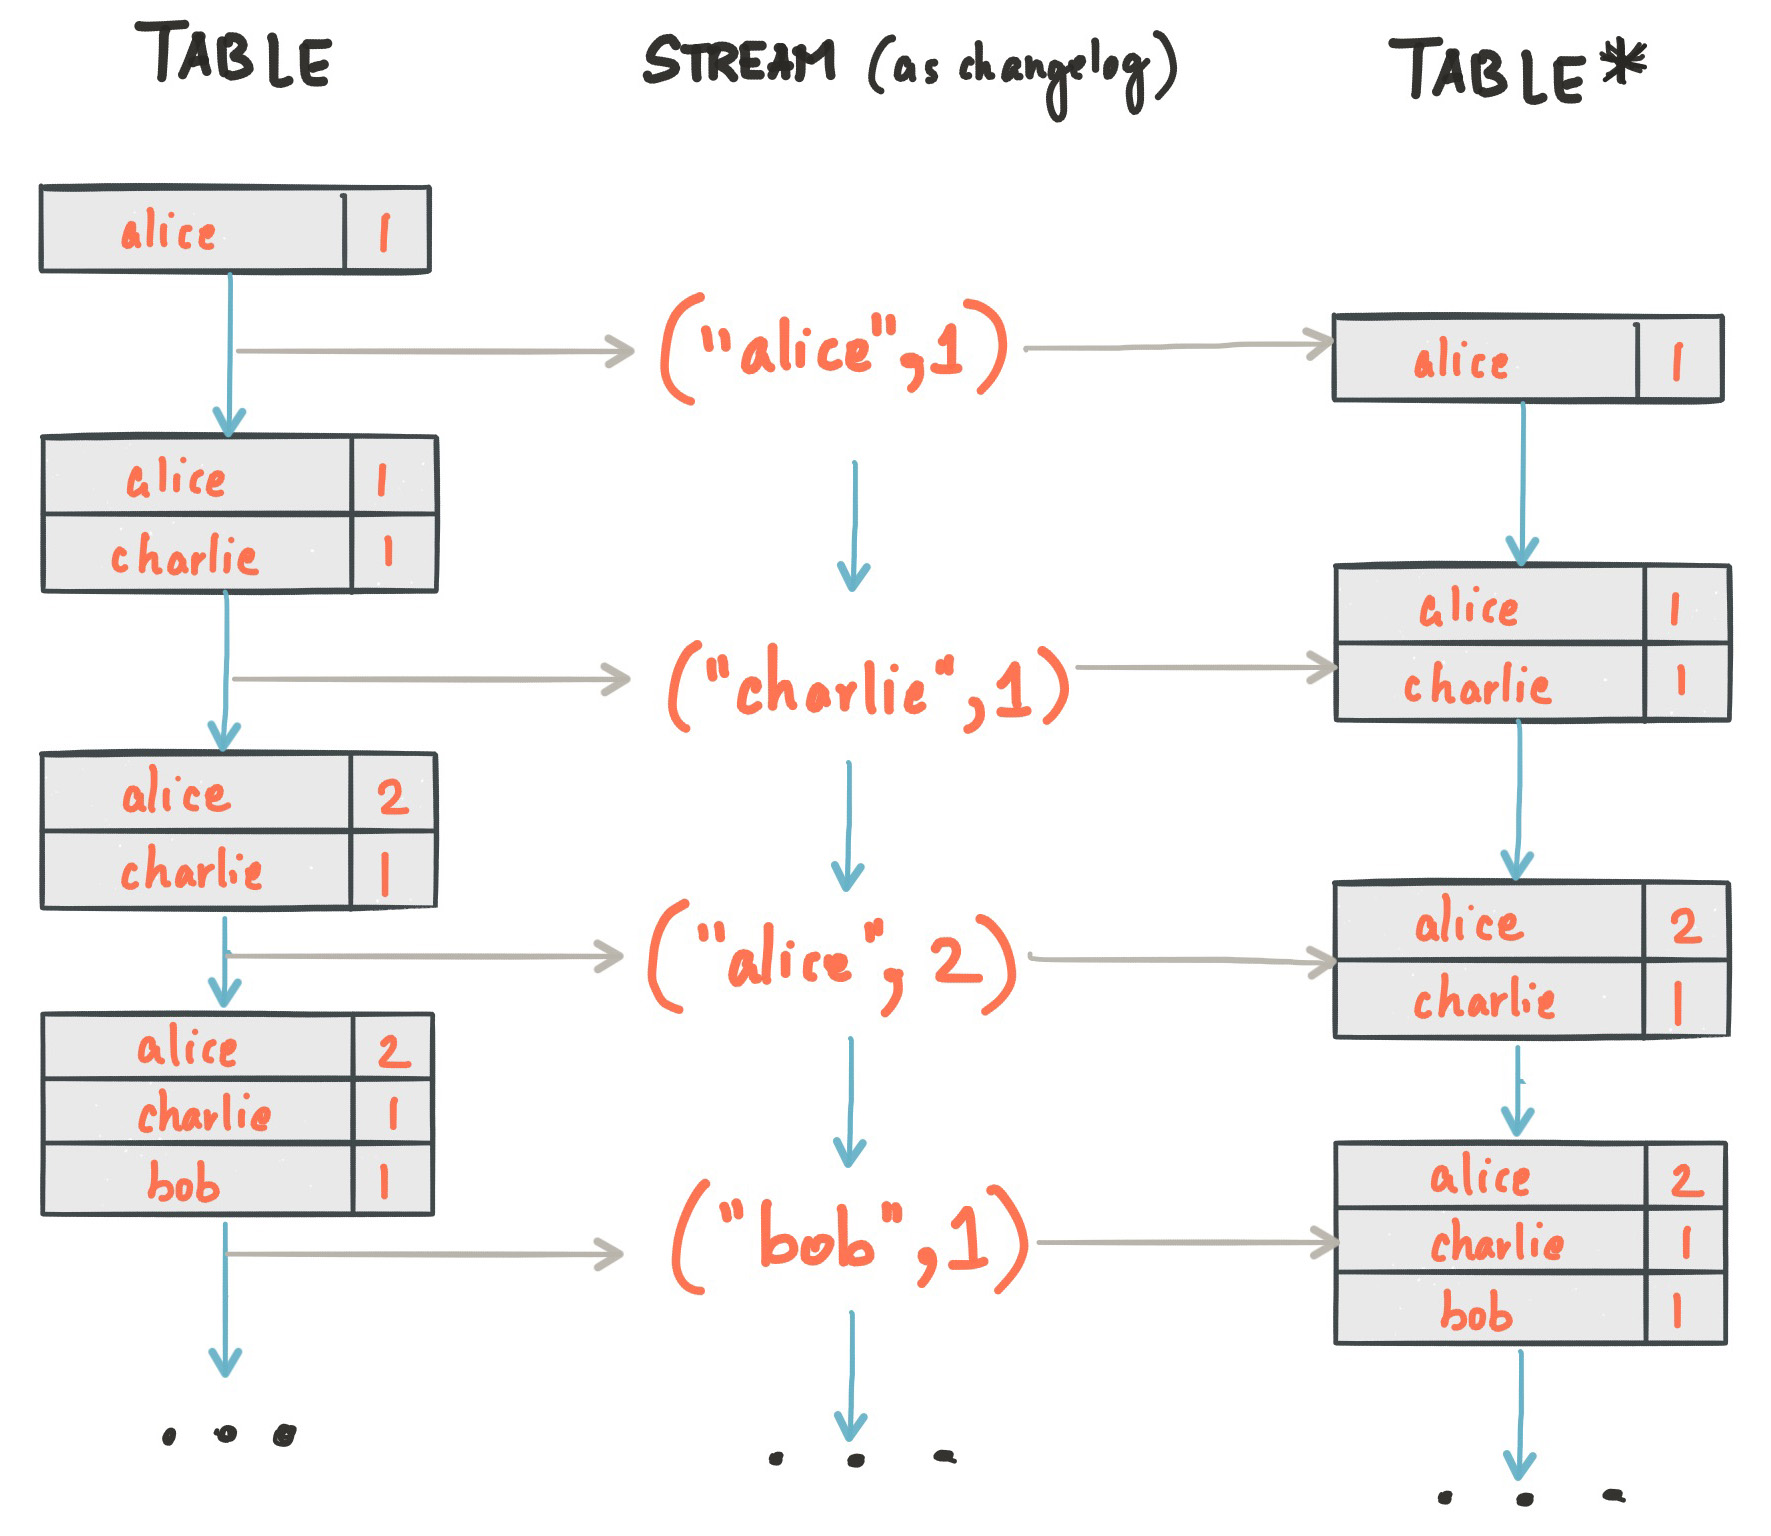 streams-table-duality-03.jpg